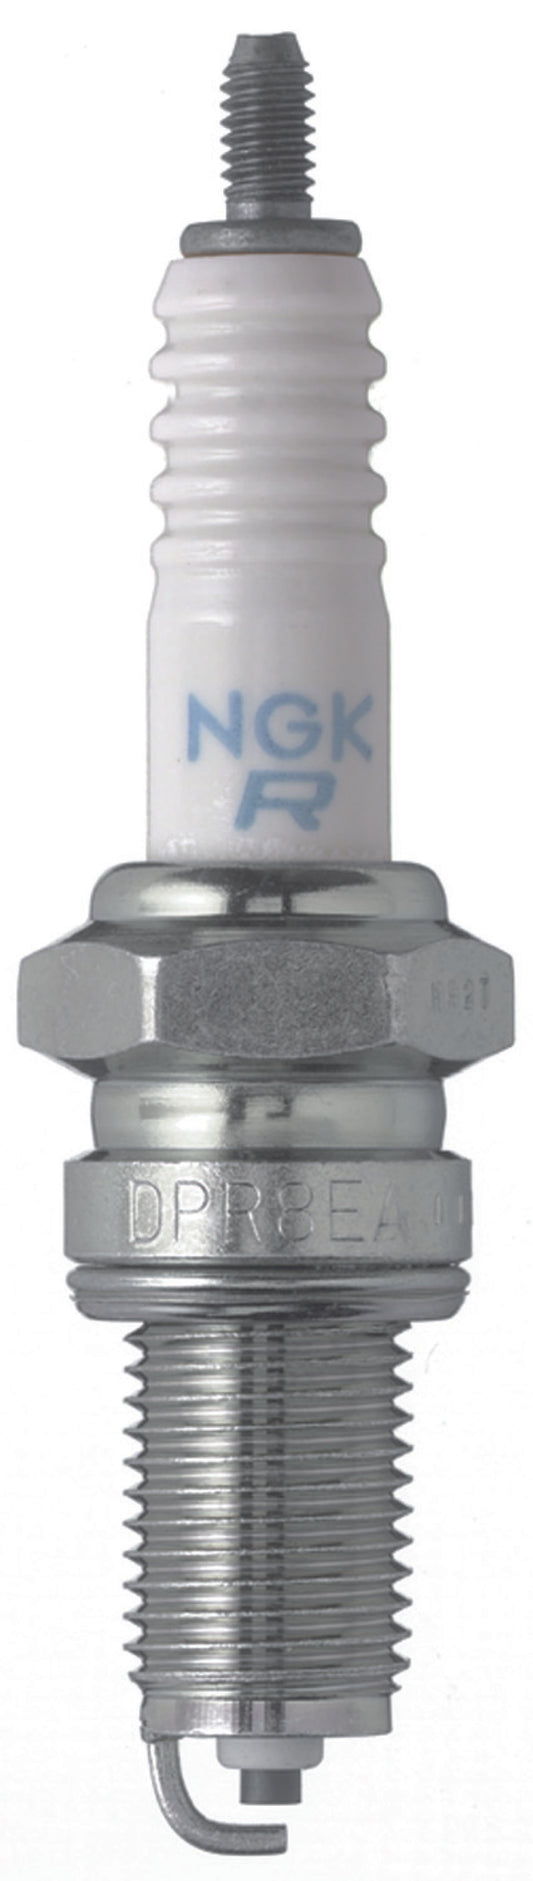 NGK BLYB Spark Plug Box of 6 (DPR6EA-9)